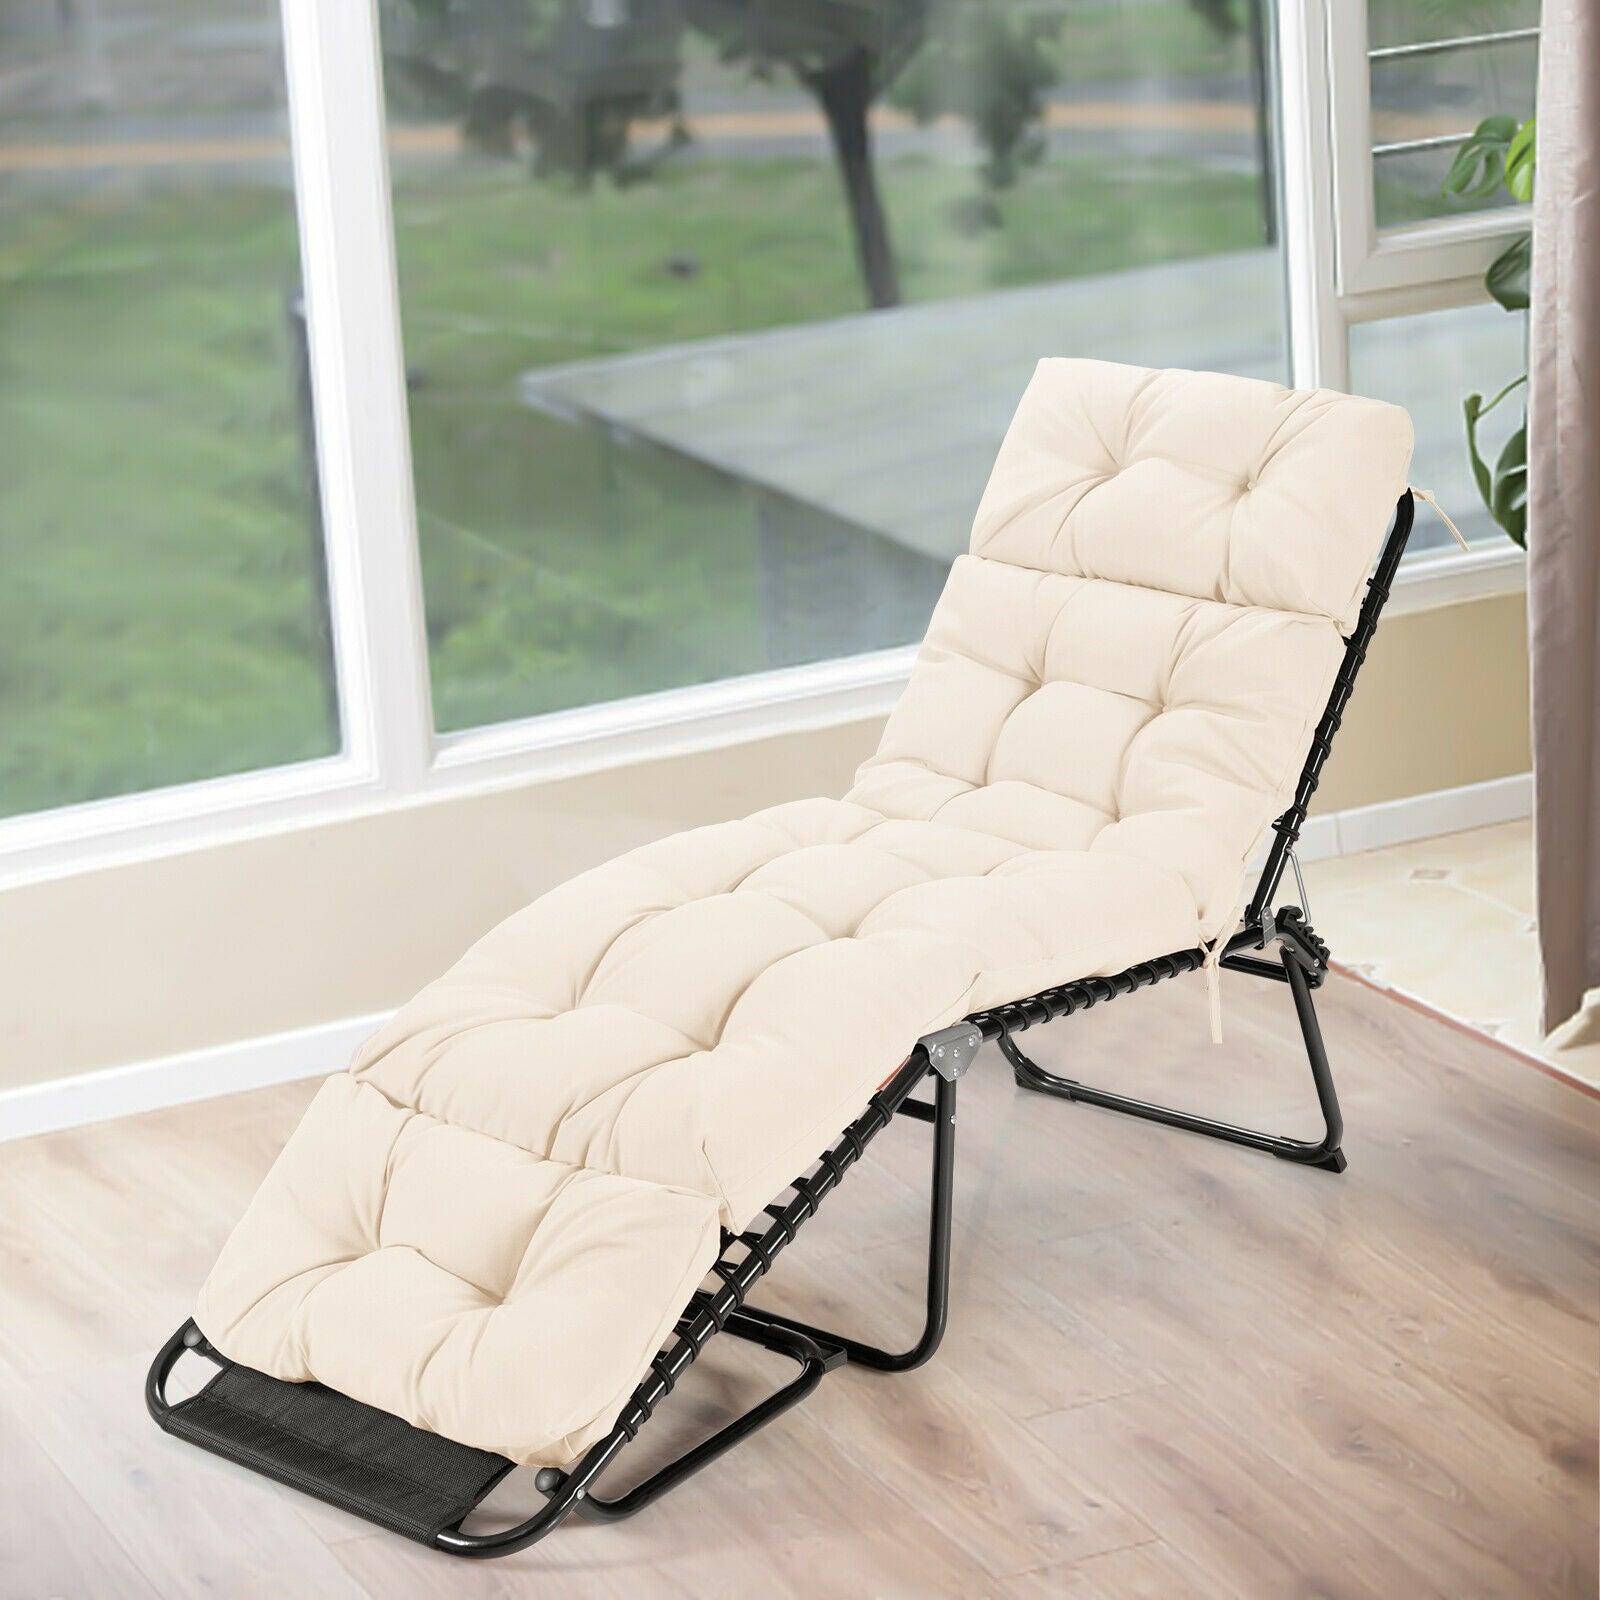 Giantex Lounge Chair Cushion,73X22X4 Inch Thick Indoor Floor Cushion